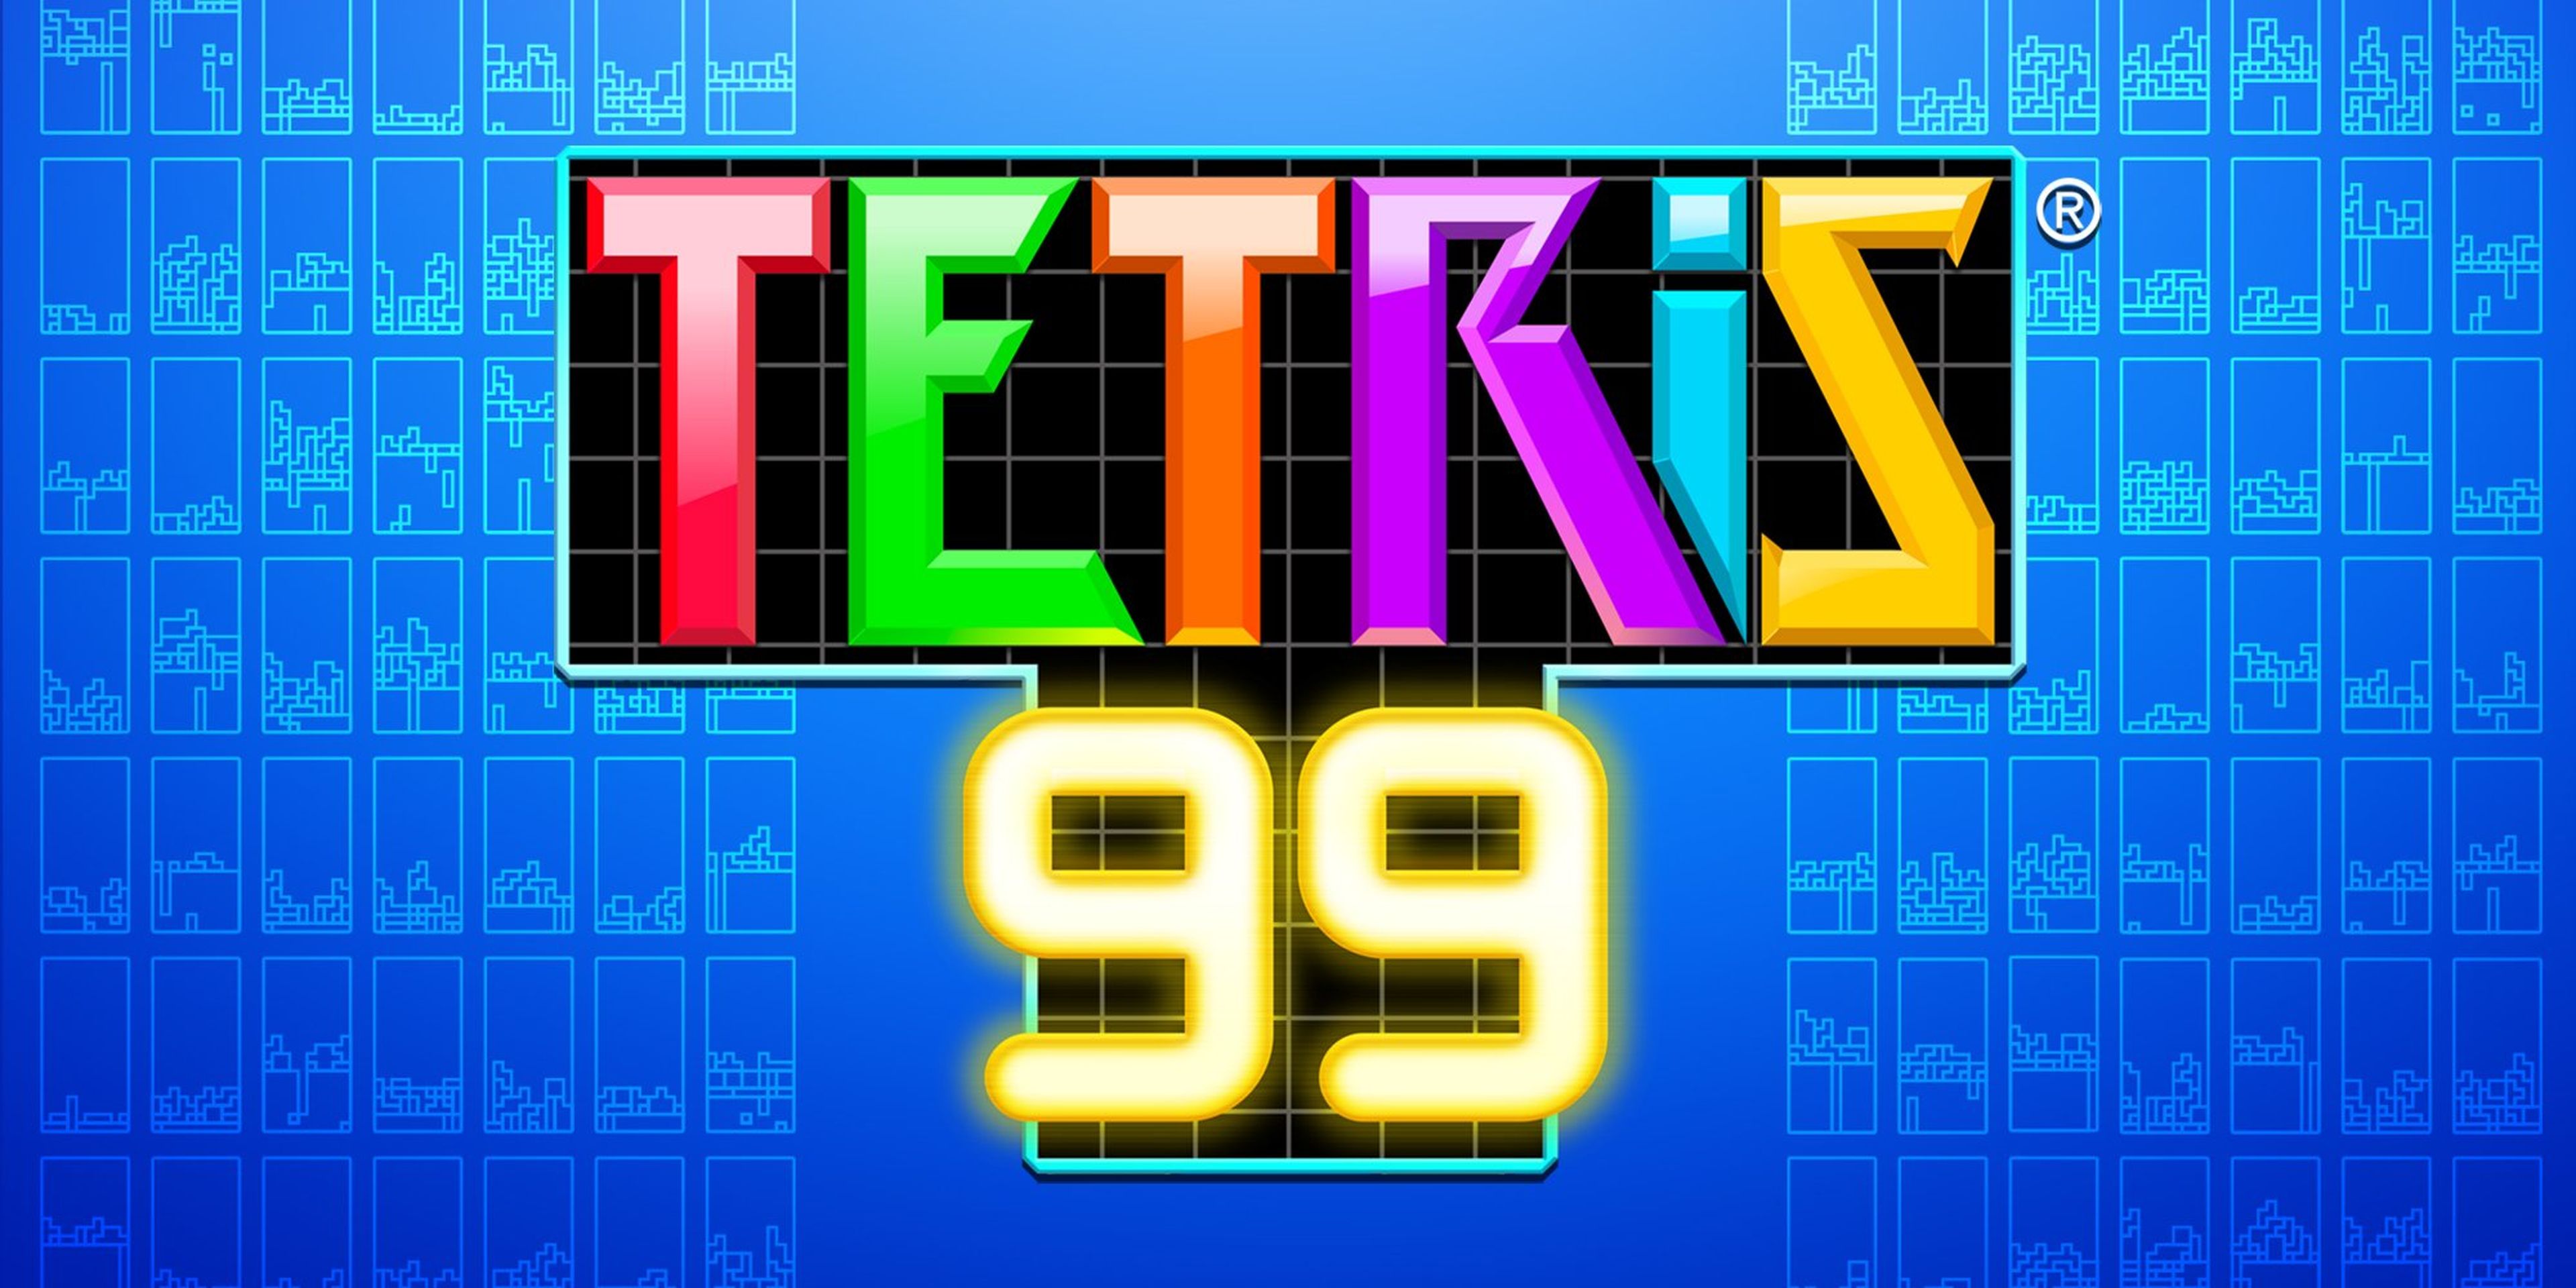 Tetris 99 tendrá un modo battle royale